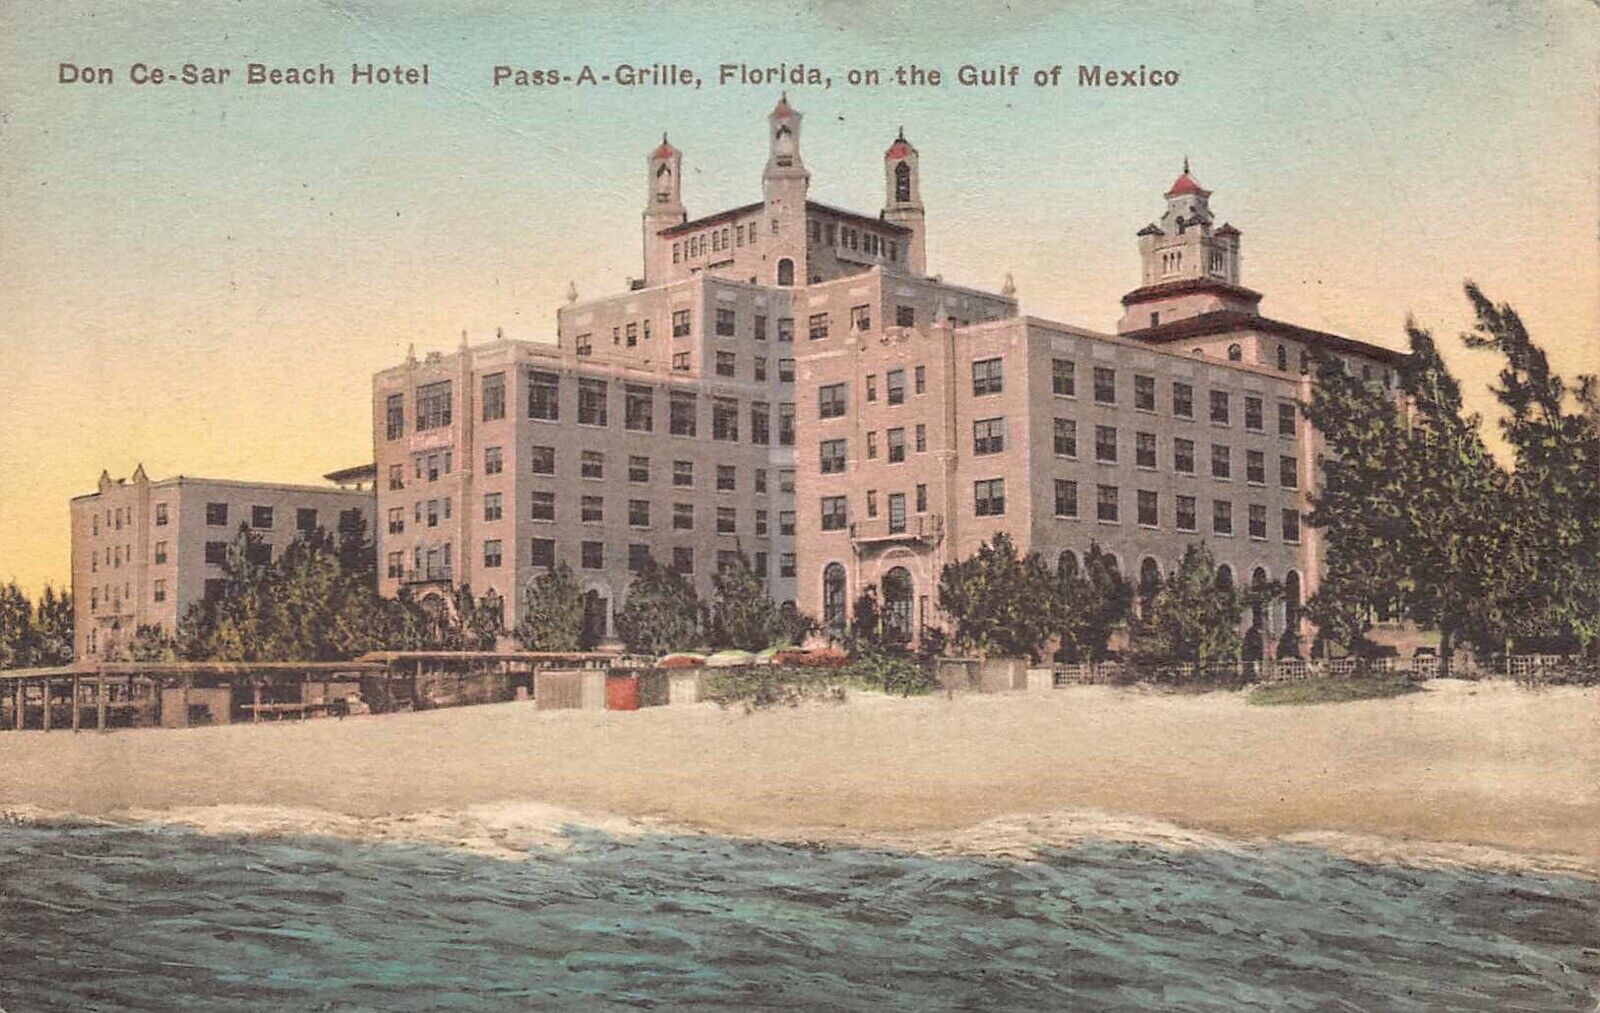 FL - 1938 Florida Don Ce-Sar Beach Hotel from Gulf at Pass-A-Grille Beach, FLA